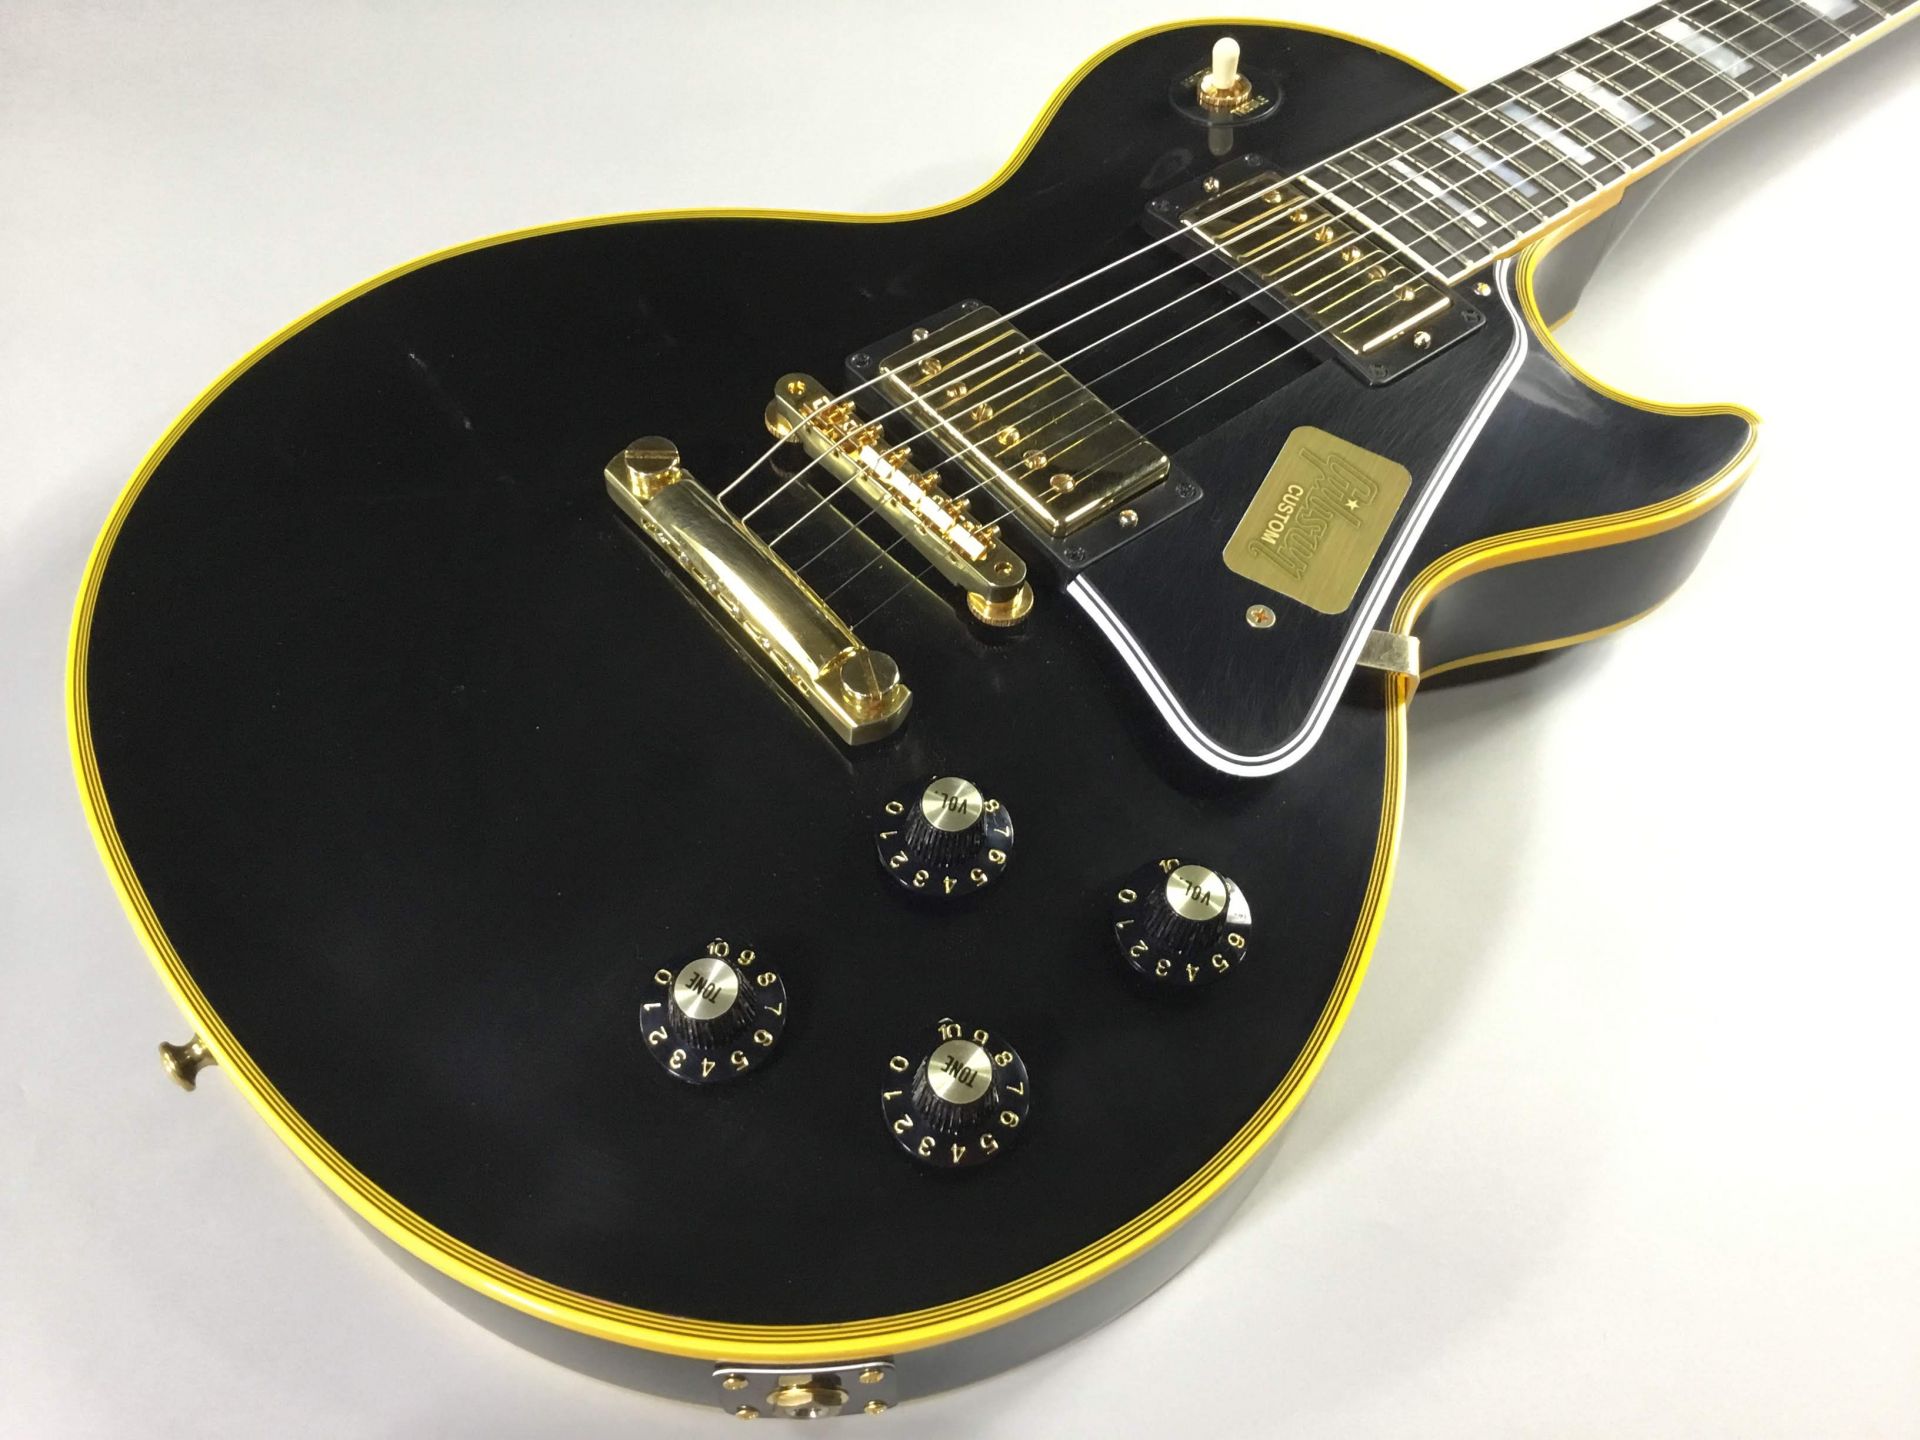 *Les Paul Custom VOS Antique Ebony　1968仕様 |*ブランド|Gibson Custom Shop| |*型番|Les Paul Custom VOS Antique Ebony　1968仕様| |*商品の状態|新品| |*販売価格|[!￥410,400(税込)! […]